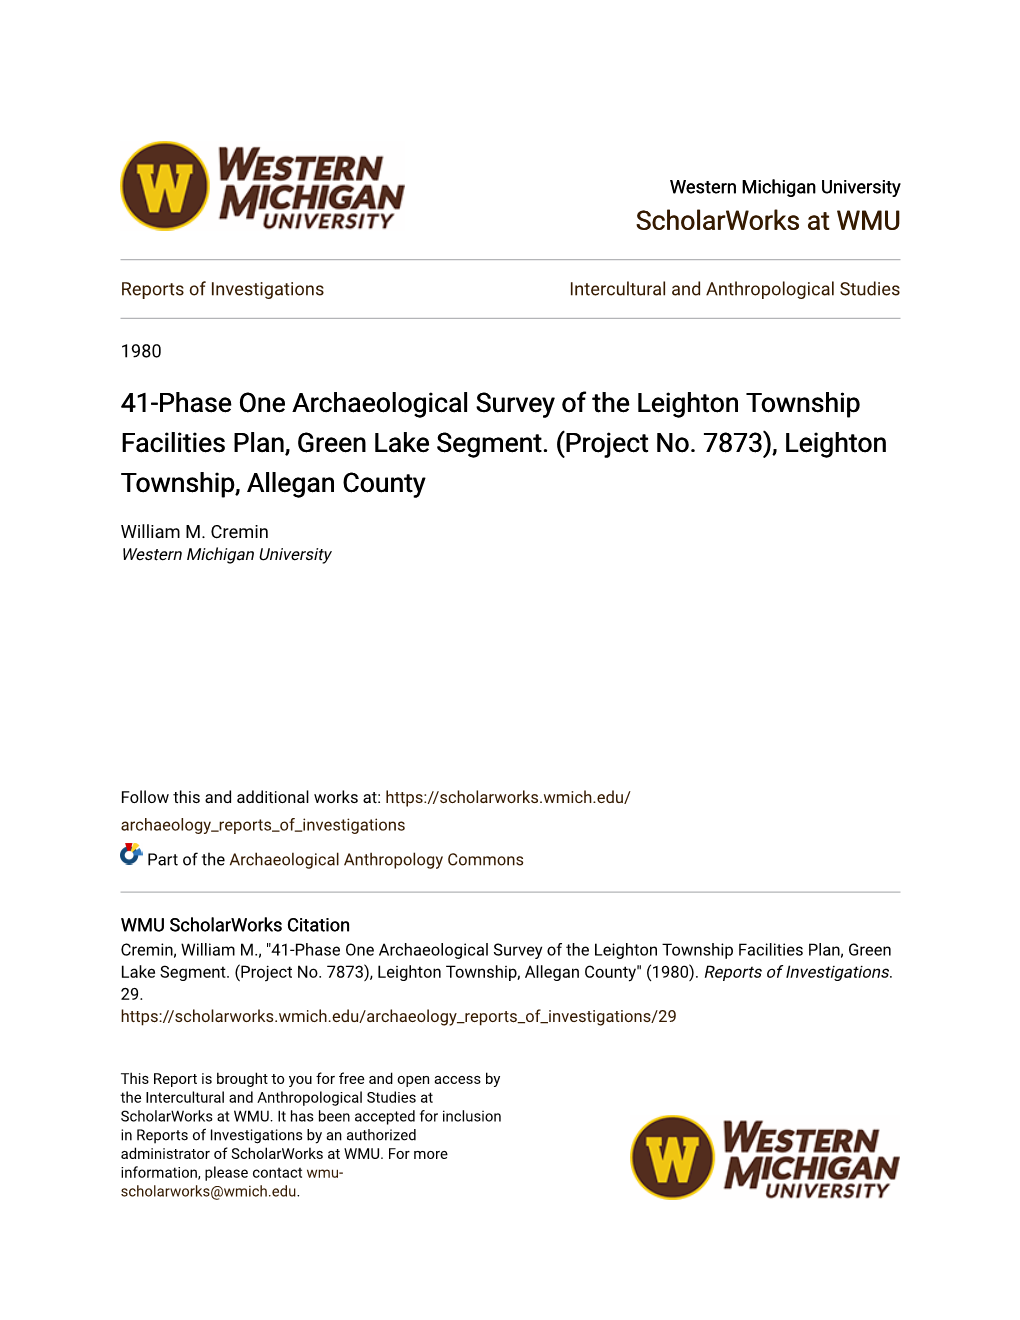 41-Phase One Archaeological Survey of the Leighton Township Facilities Plan, Green Lake Segment